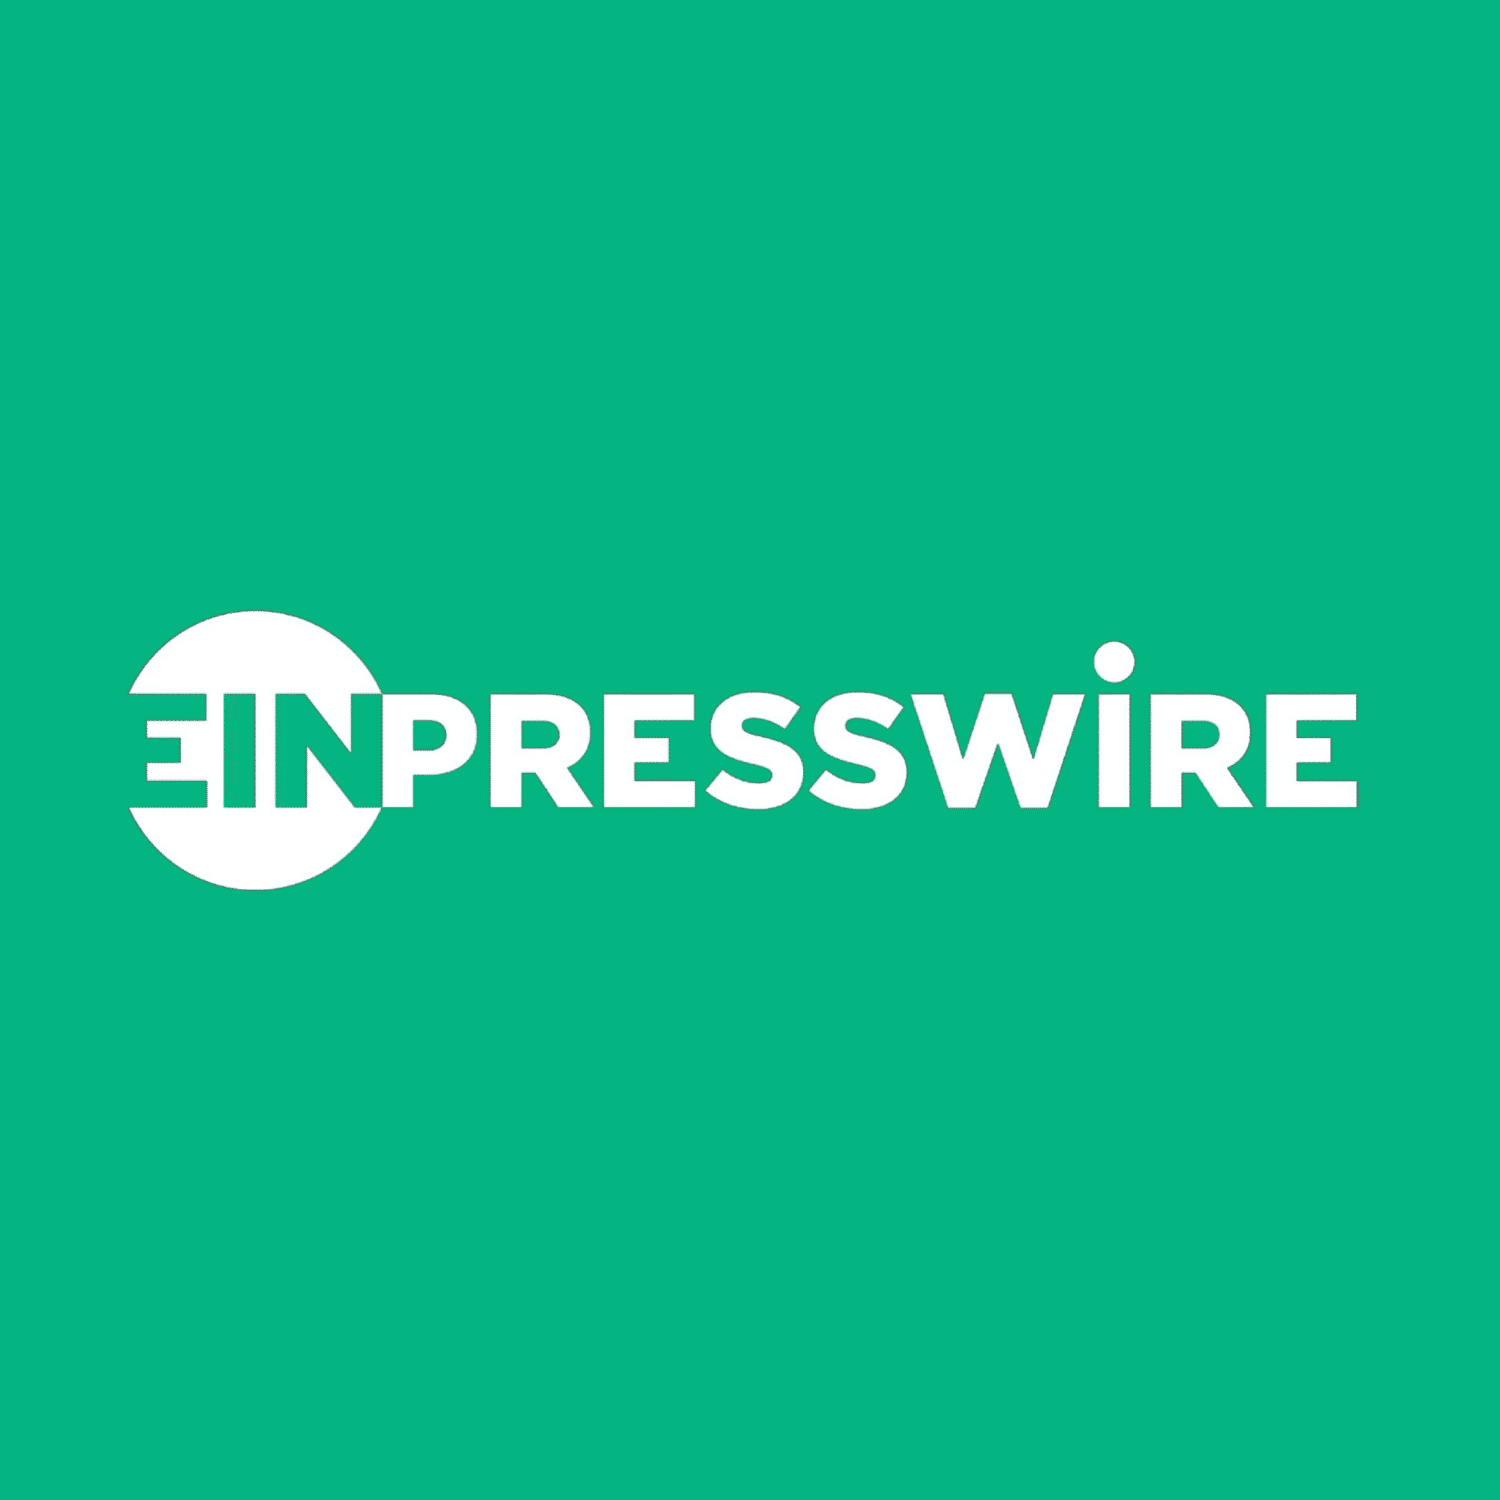 EIN Presswire Affiliate Program | Earn Up to 25% Per Sale